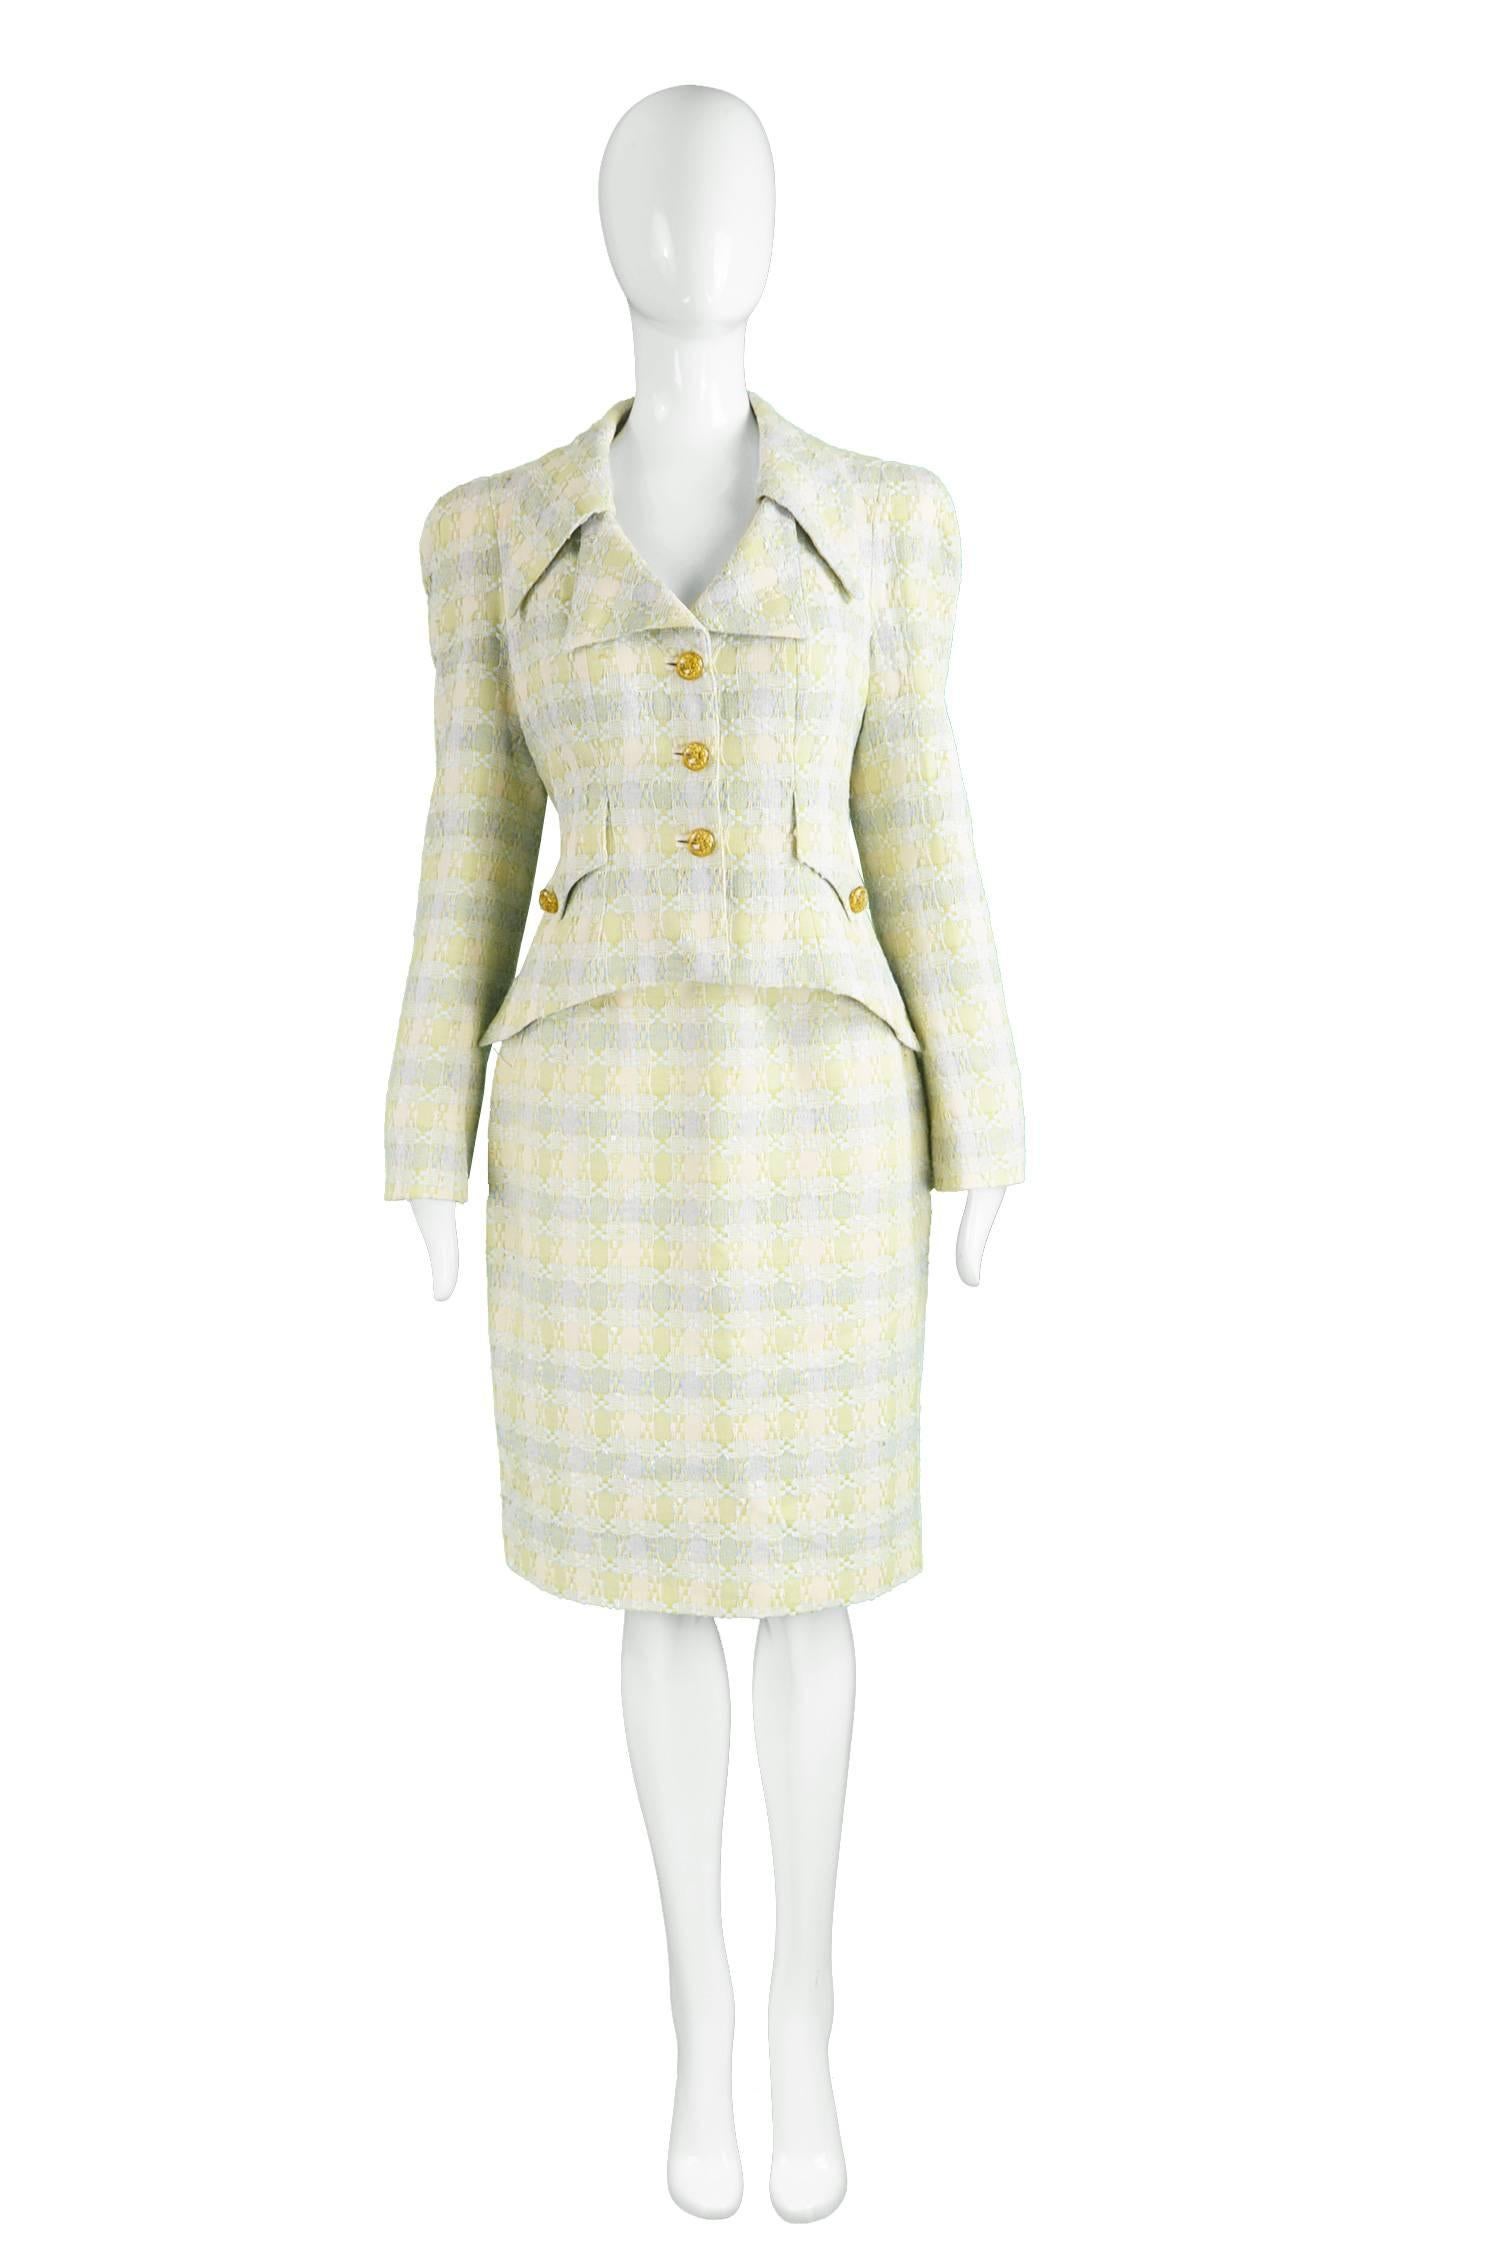 Unworn Christian Lacroix Cotton & Raffia Tweed Vintage Skirt Suit, 1990s

Estimated Size: UK 10/ US 6/ EU 38. Please check measurements.
Bust - 36” / 91cm (allow a couple of inches room for movement) 
Length of jacket (Shoulder to Hem) - 21” /